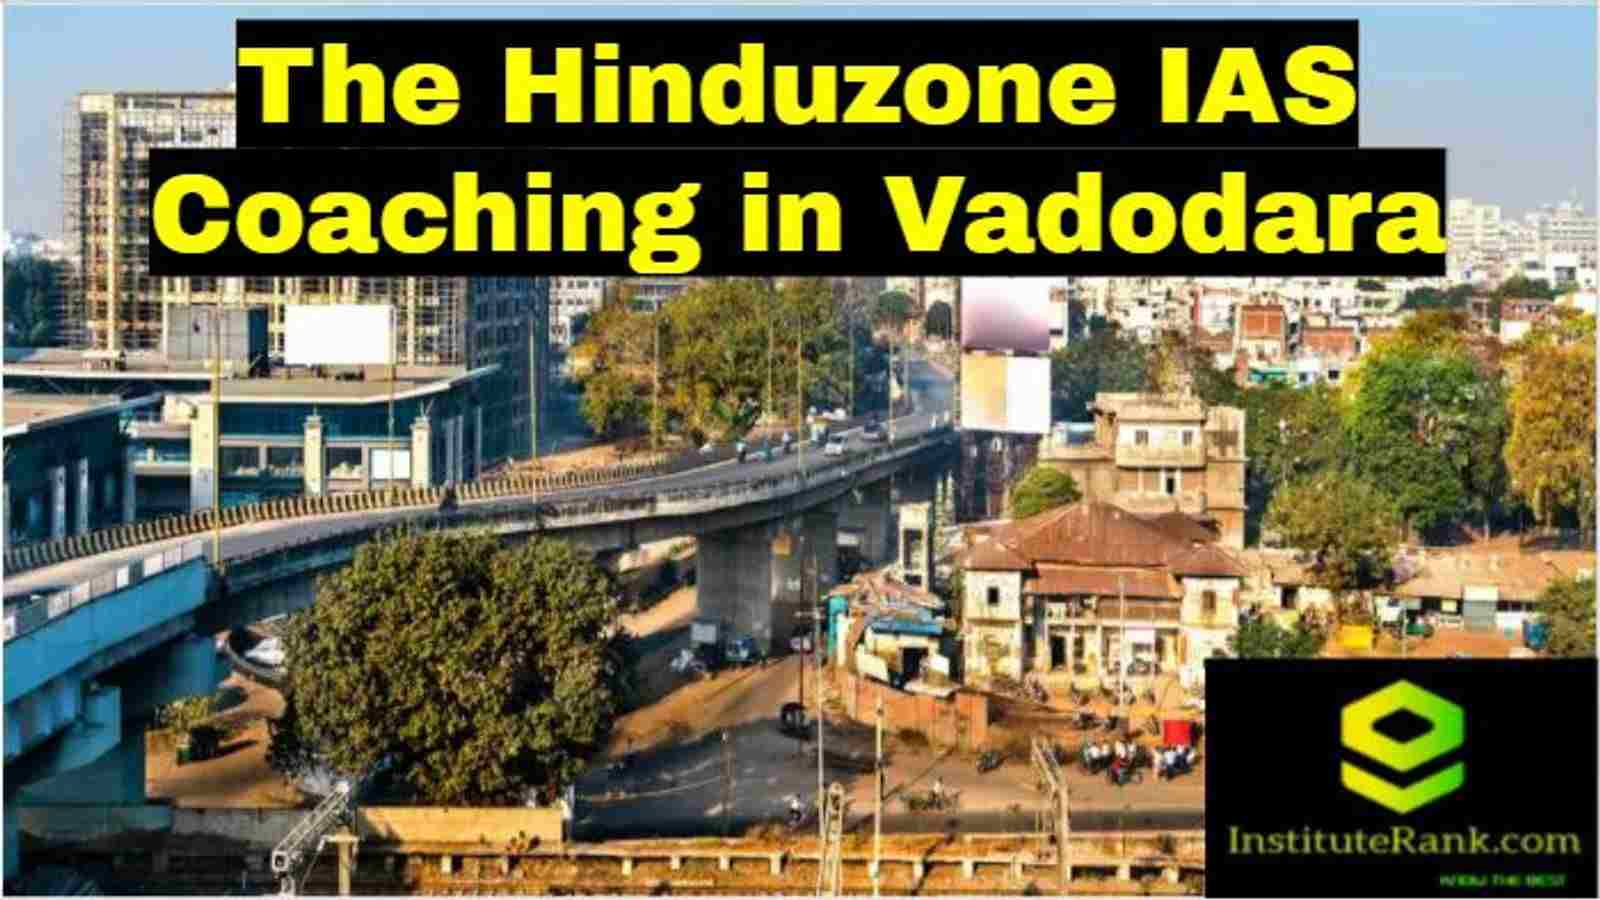 The Hinduzone IAS Coaching in Vadodara